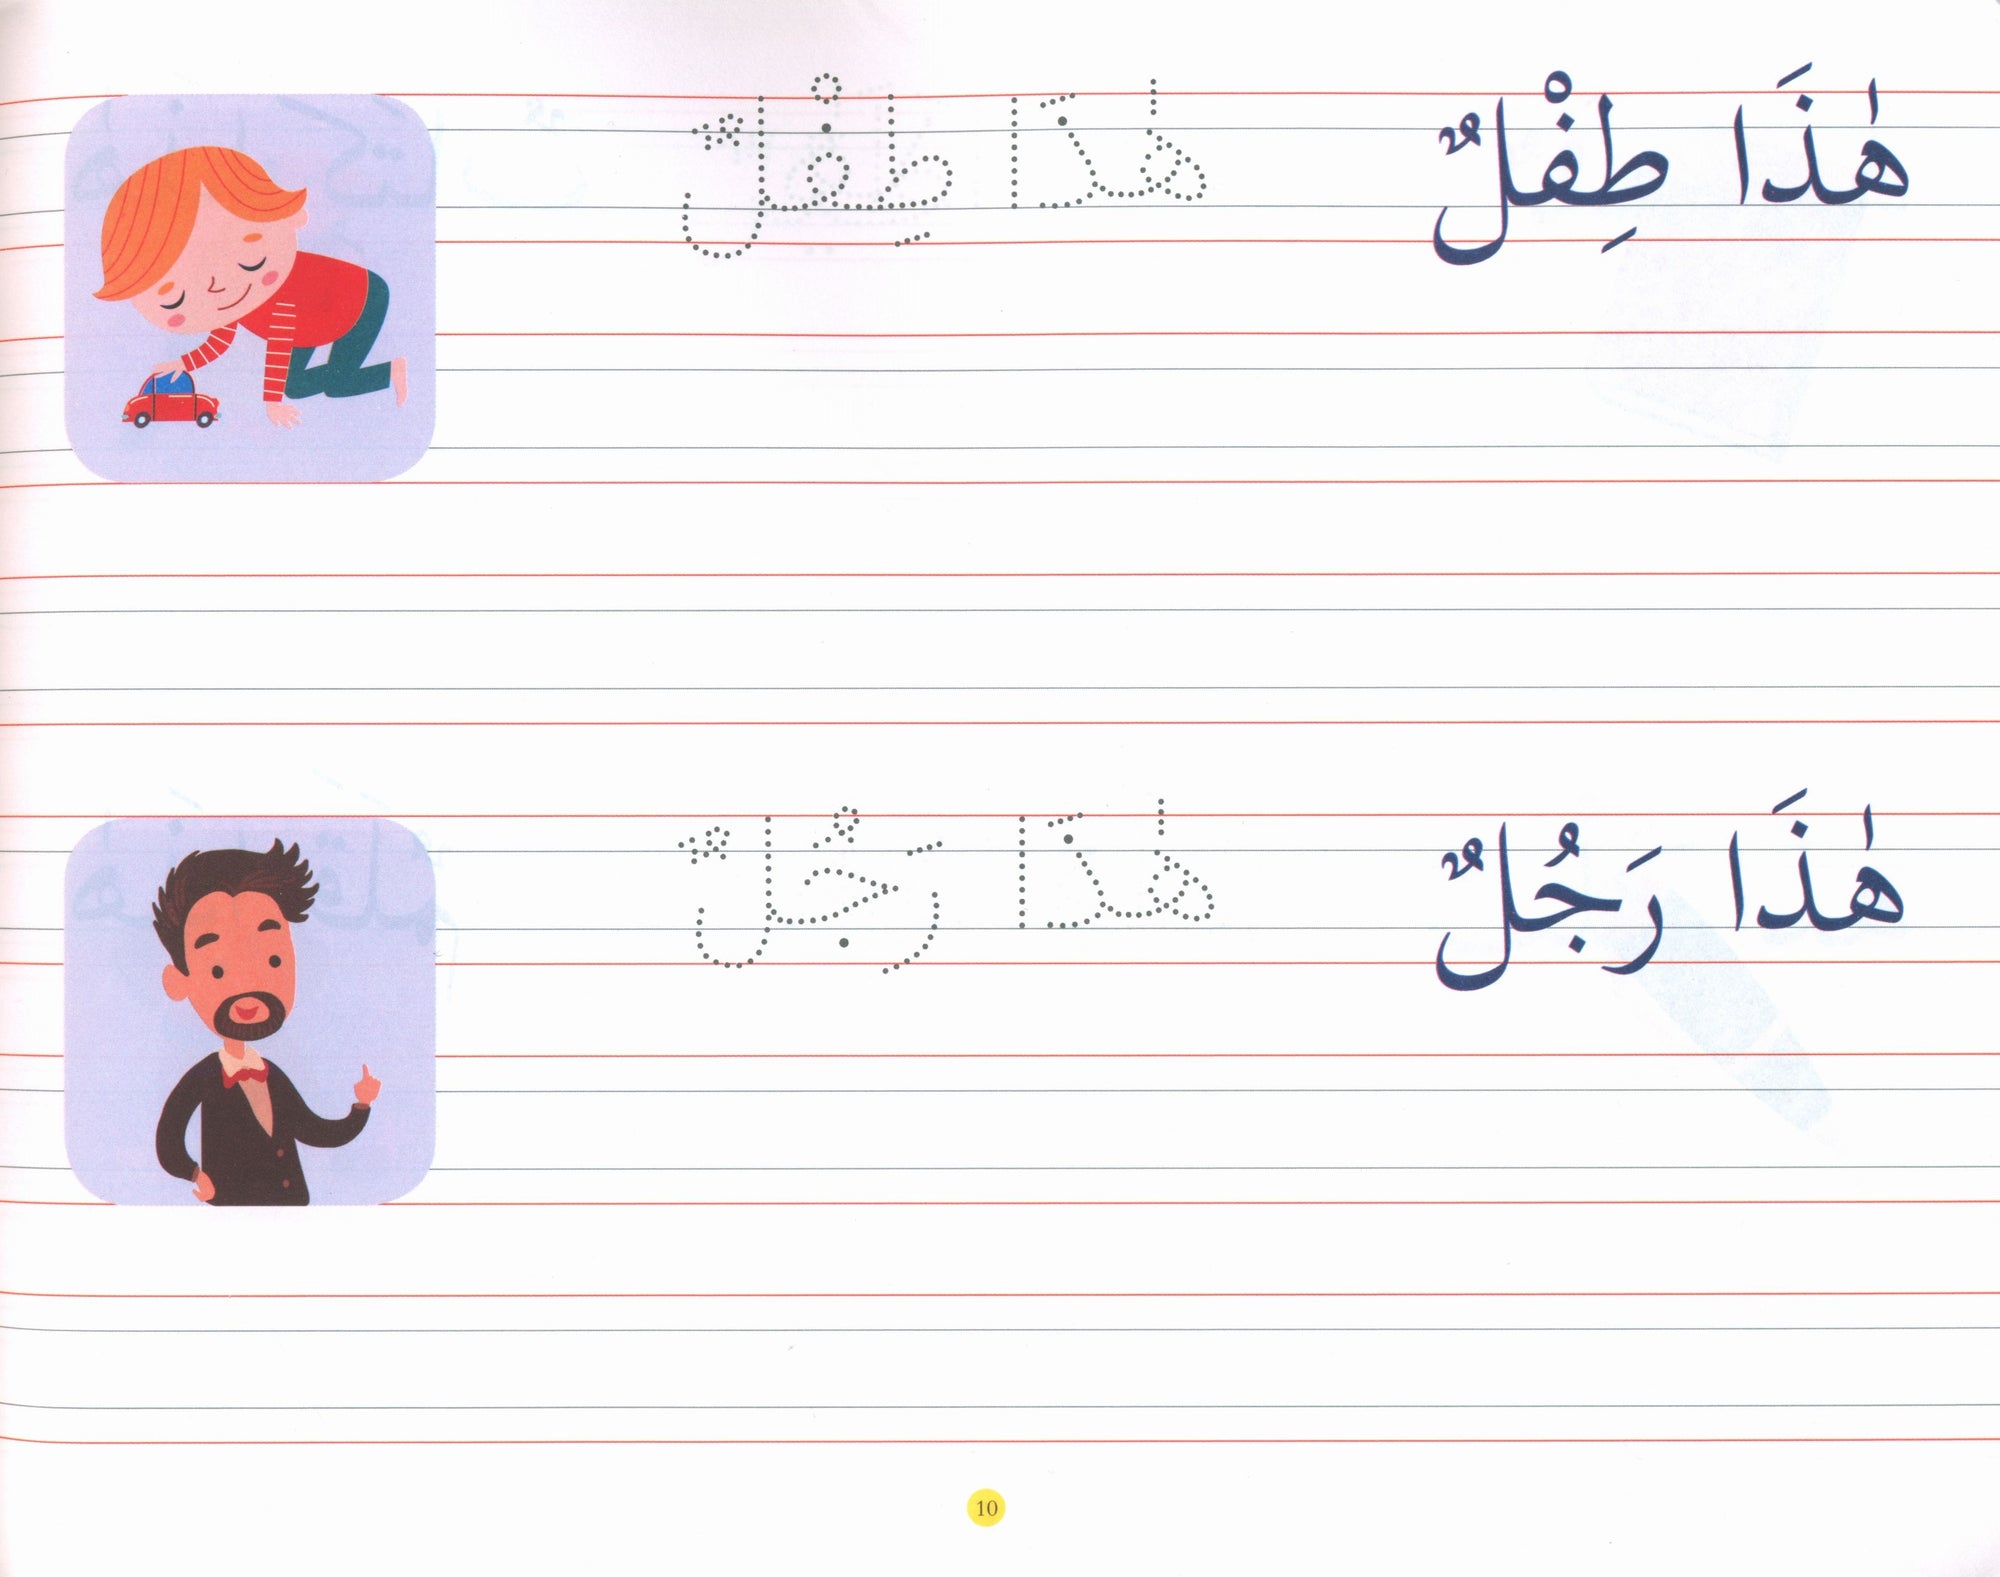 Goodword Arabic Writing Book 3